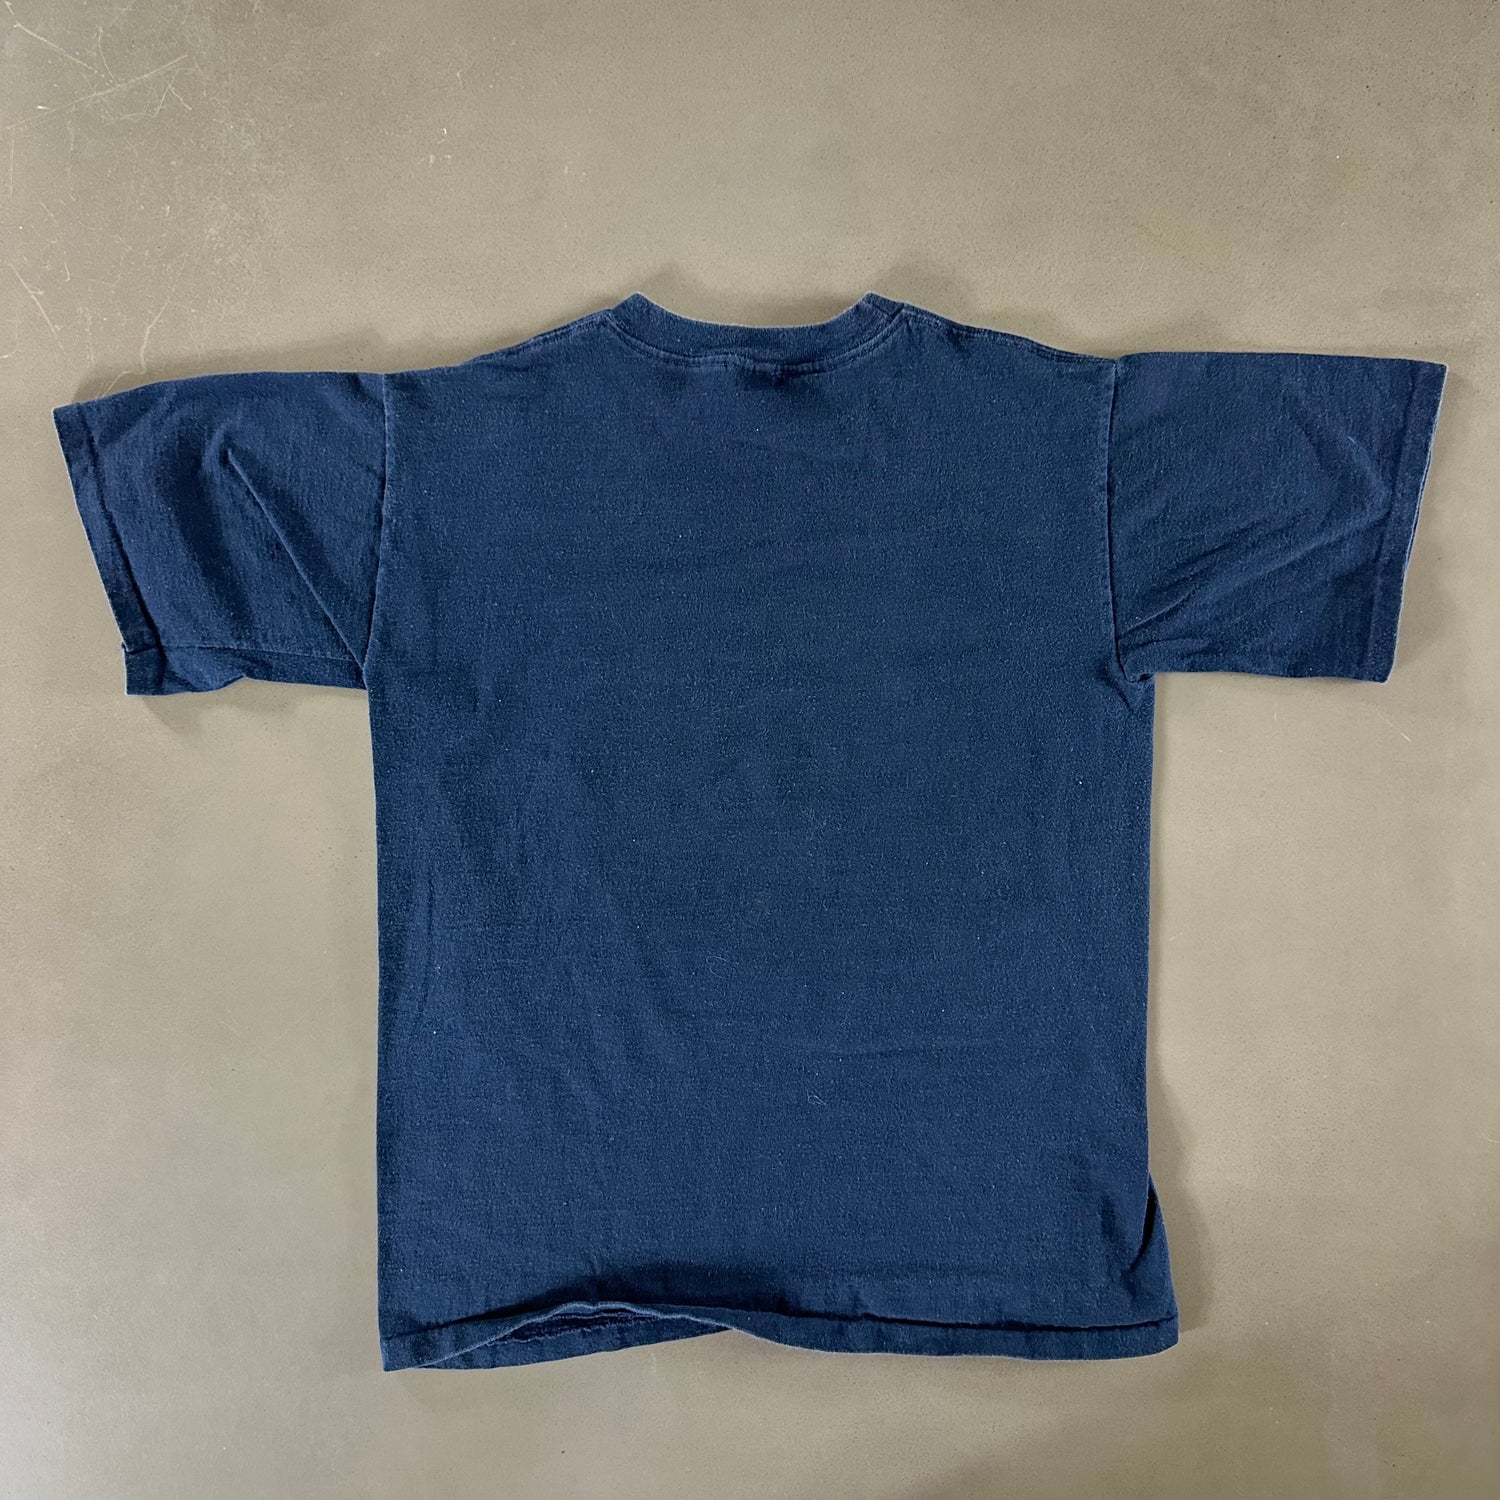 Vintage 1992 Florida T-shirt size Large